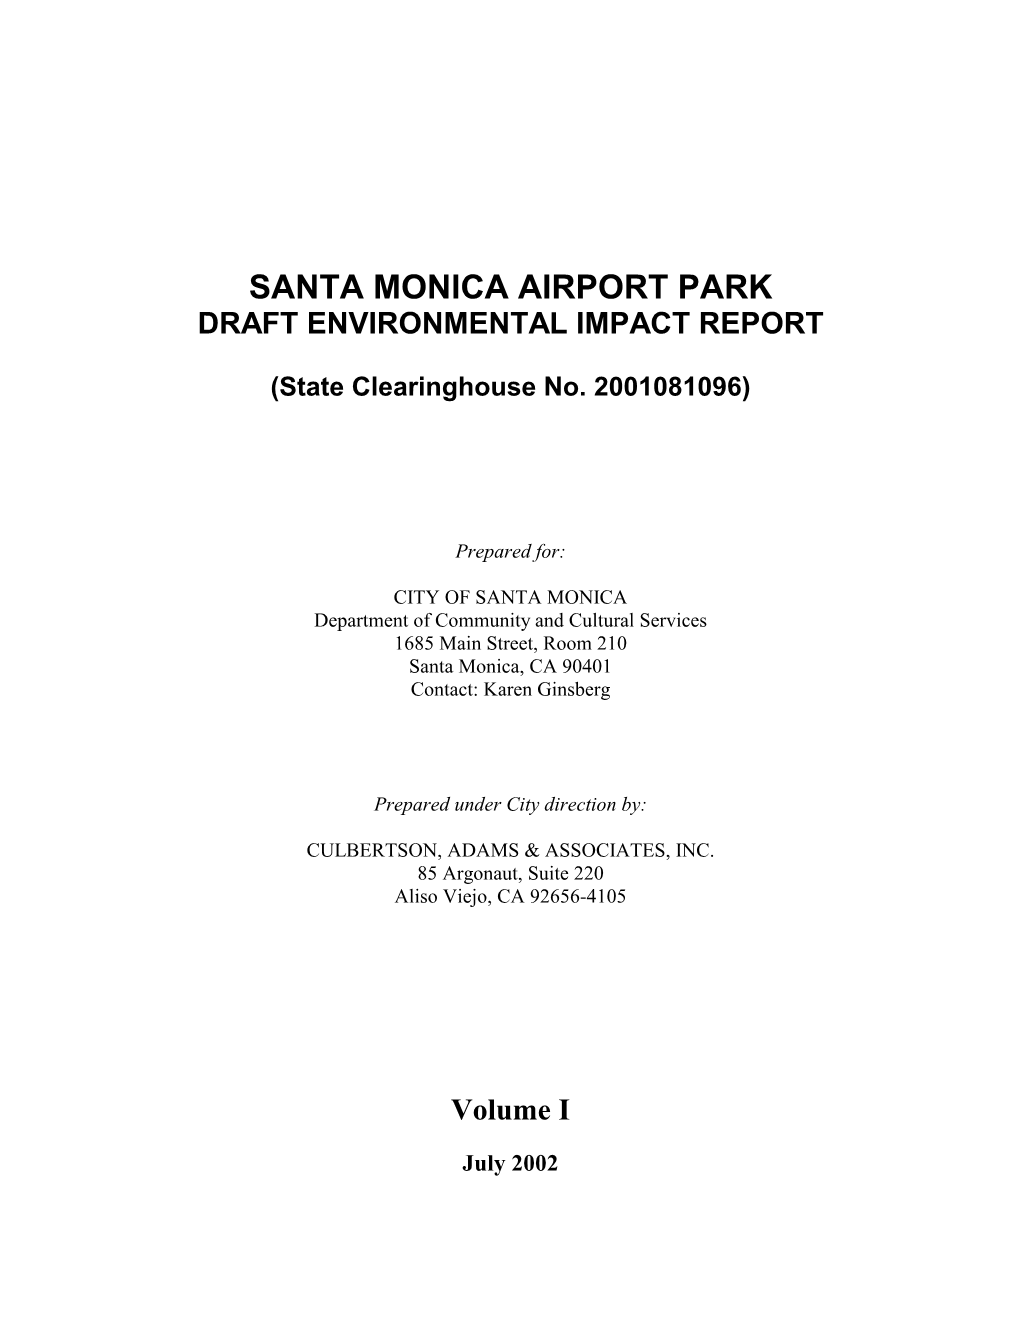 Santa Monica Airport Park Draft Environmental Impact Report